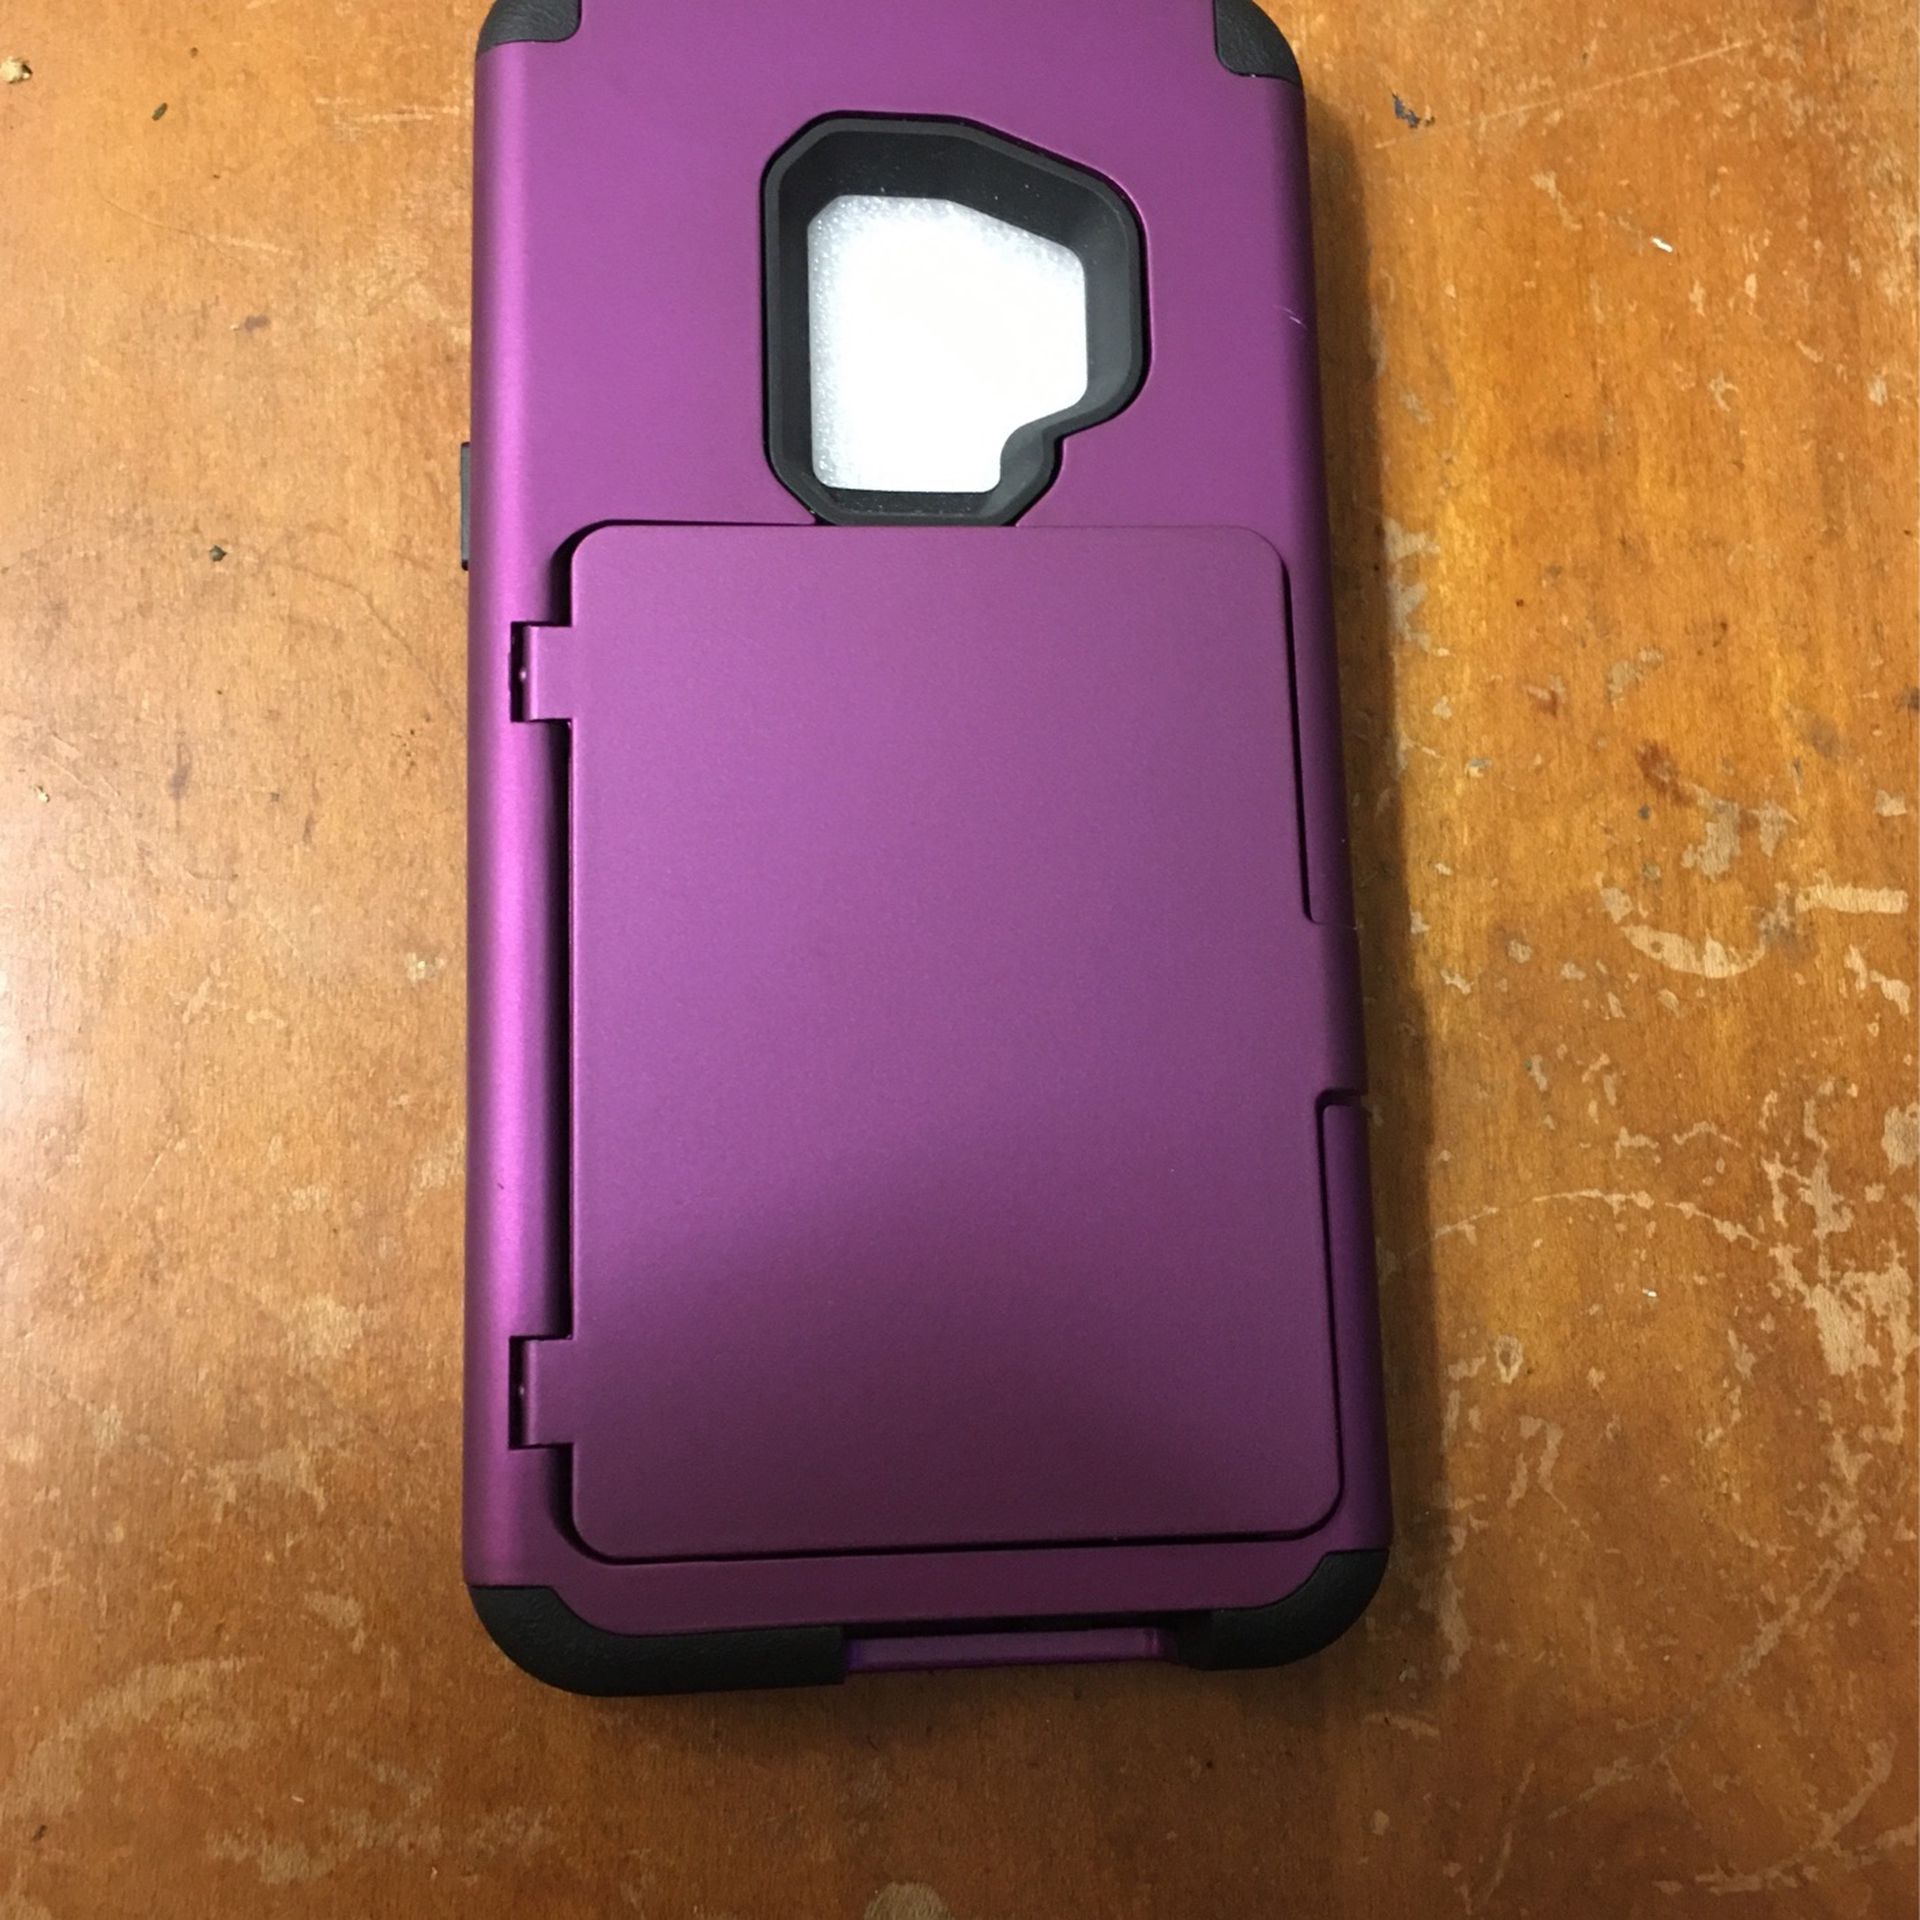 Samsung galaxy S9 purple with mirror